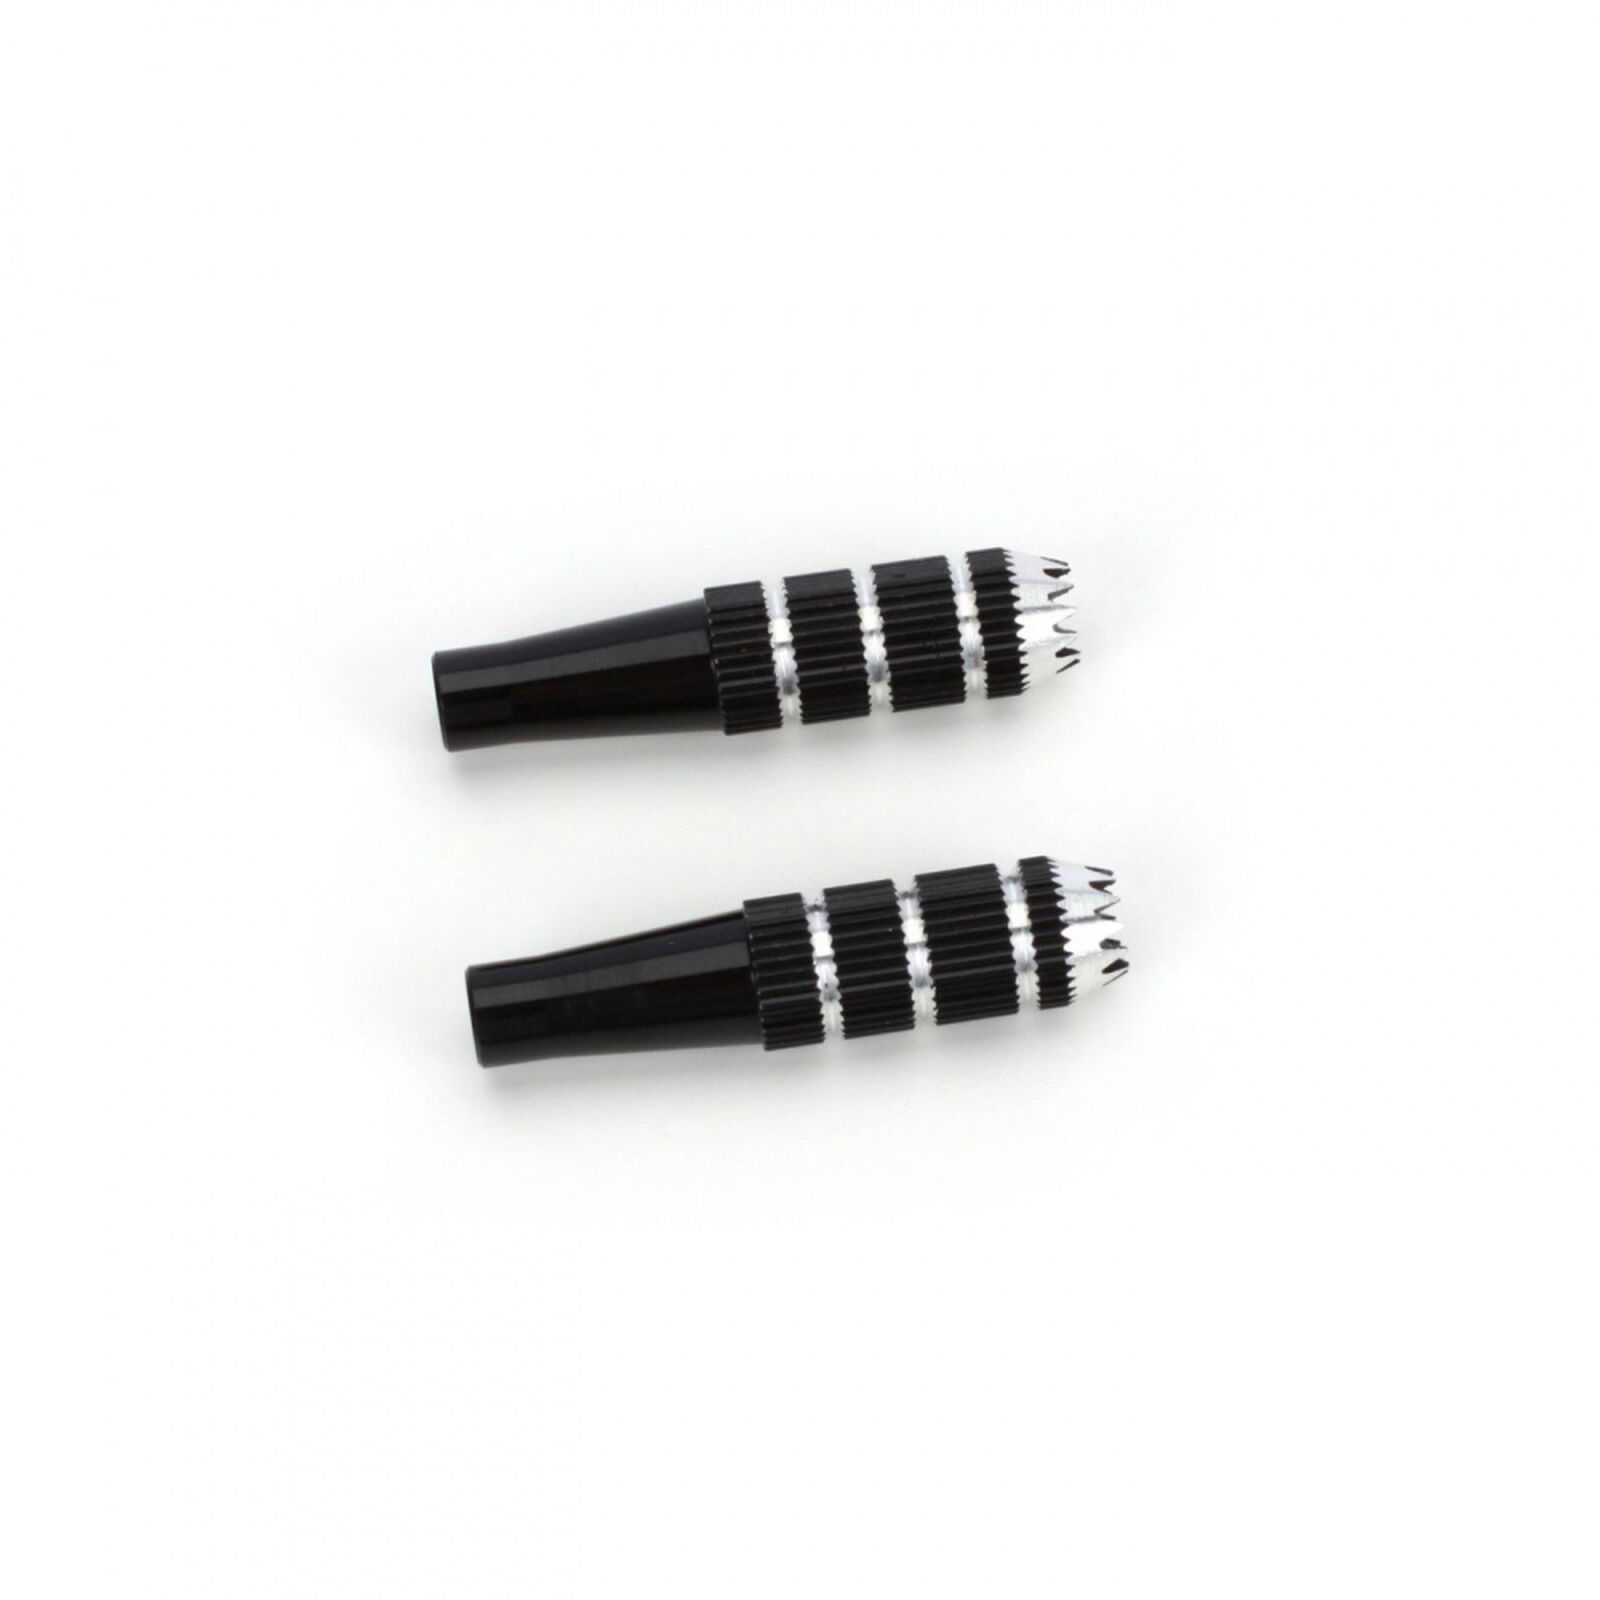 Gimbal Stick Ends 34mm, Black with Silver (2): DX6i, DX6e, DX7s, DX8, DX9, DX18QQ